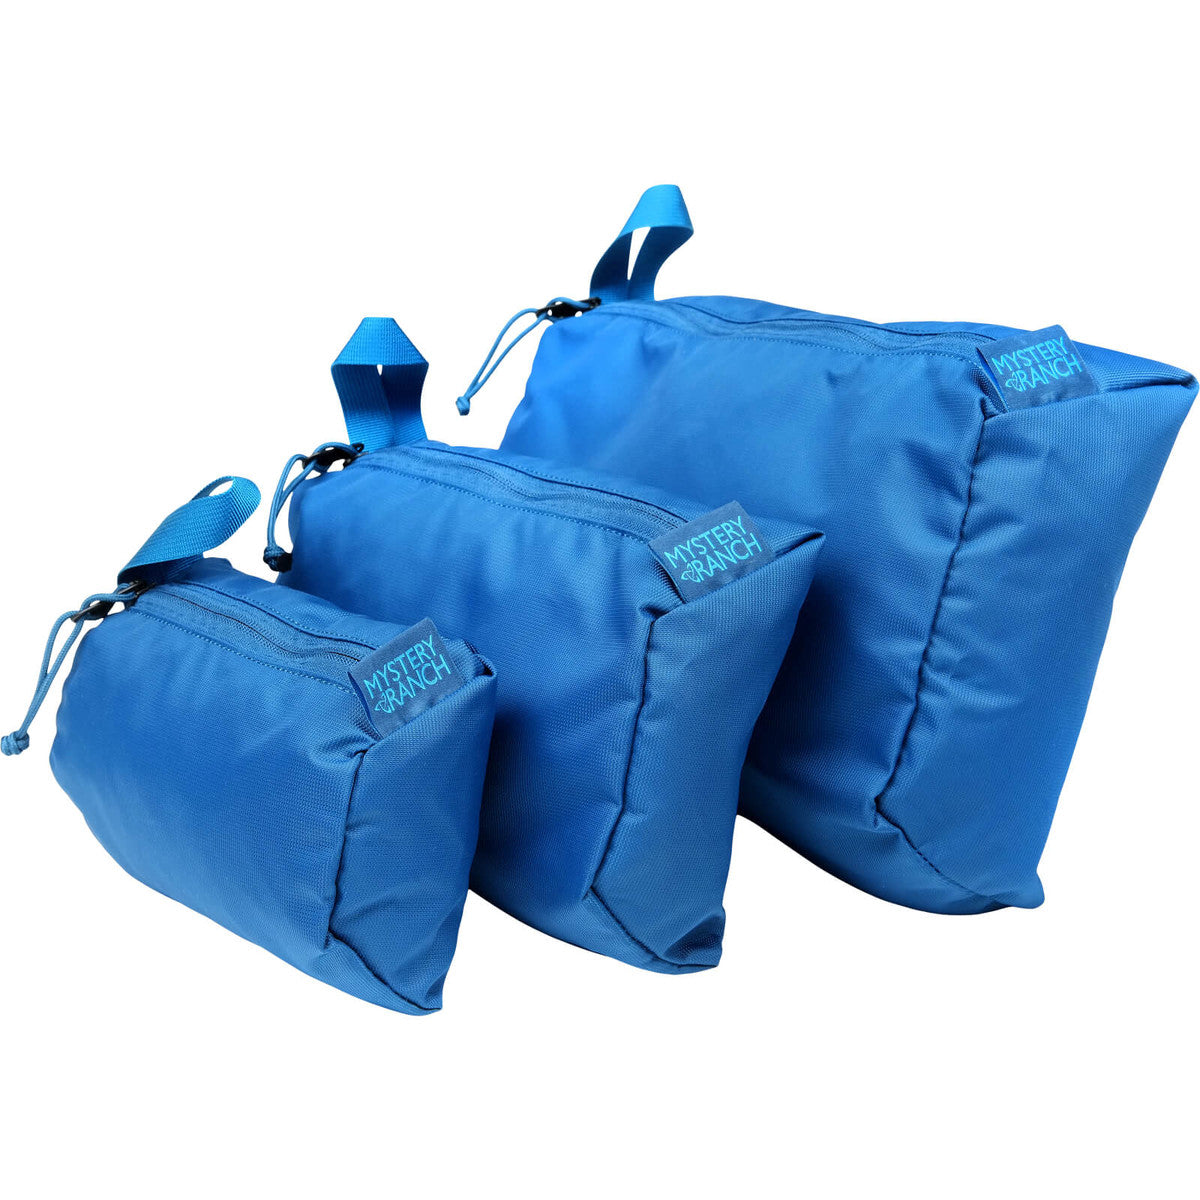 Zoid Bag Set in Del Mar